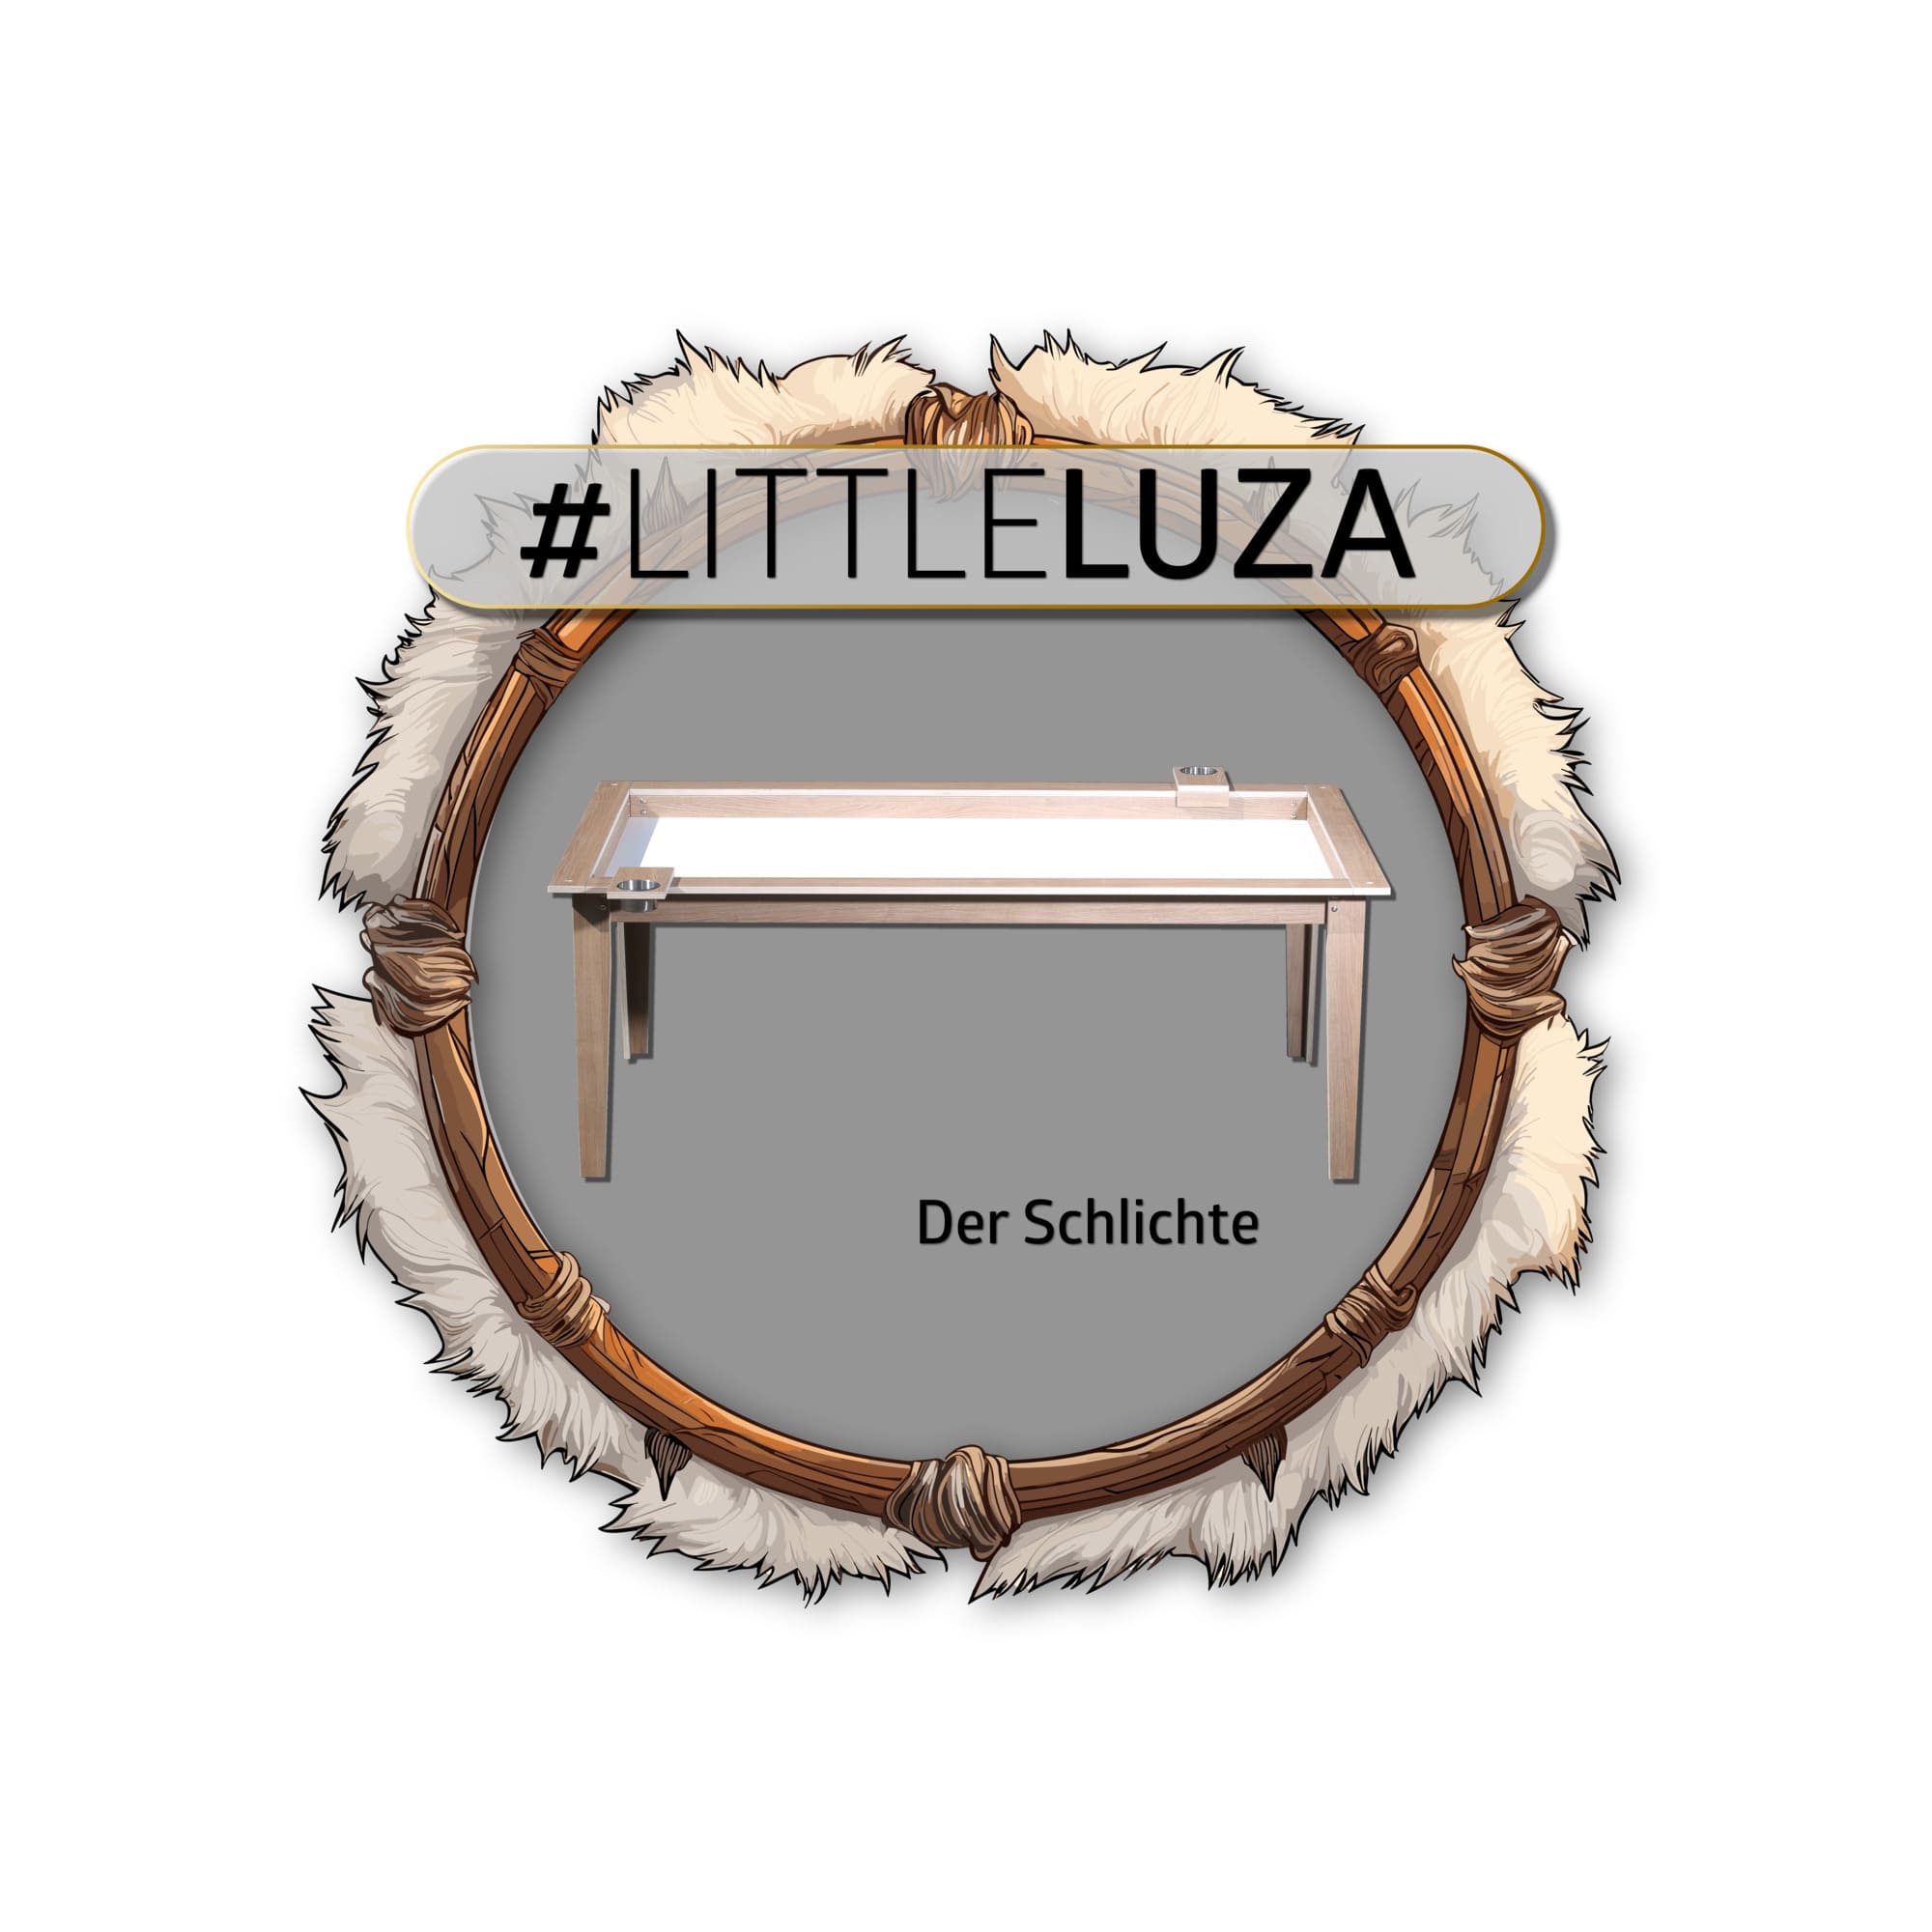 littleluza_nrettspieltisch_gamingtable